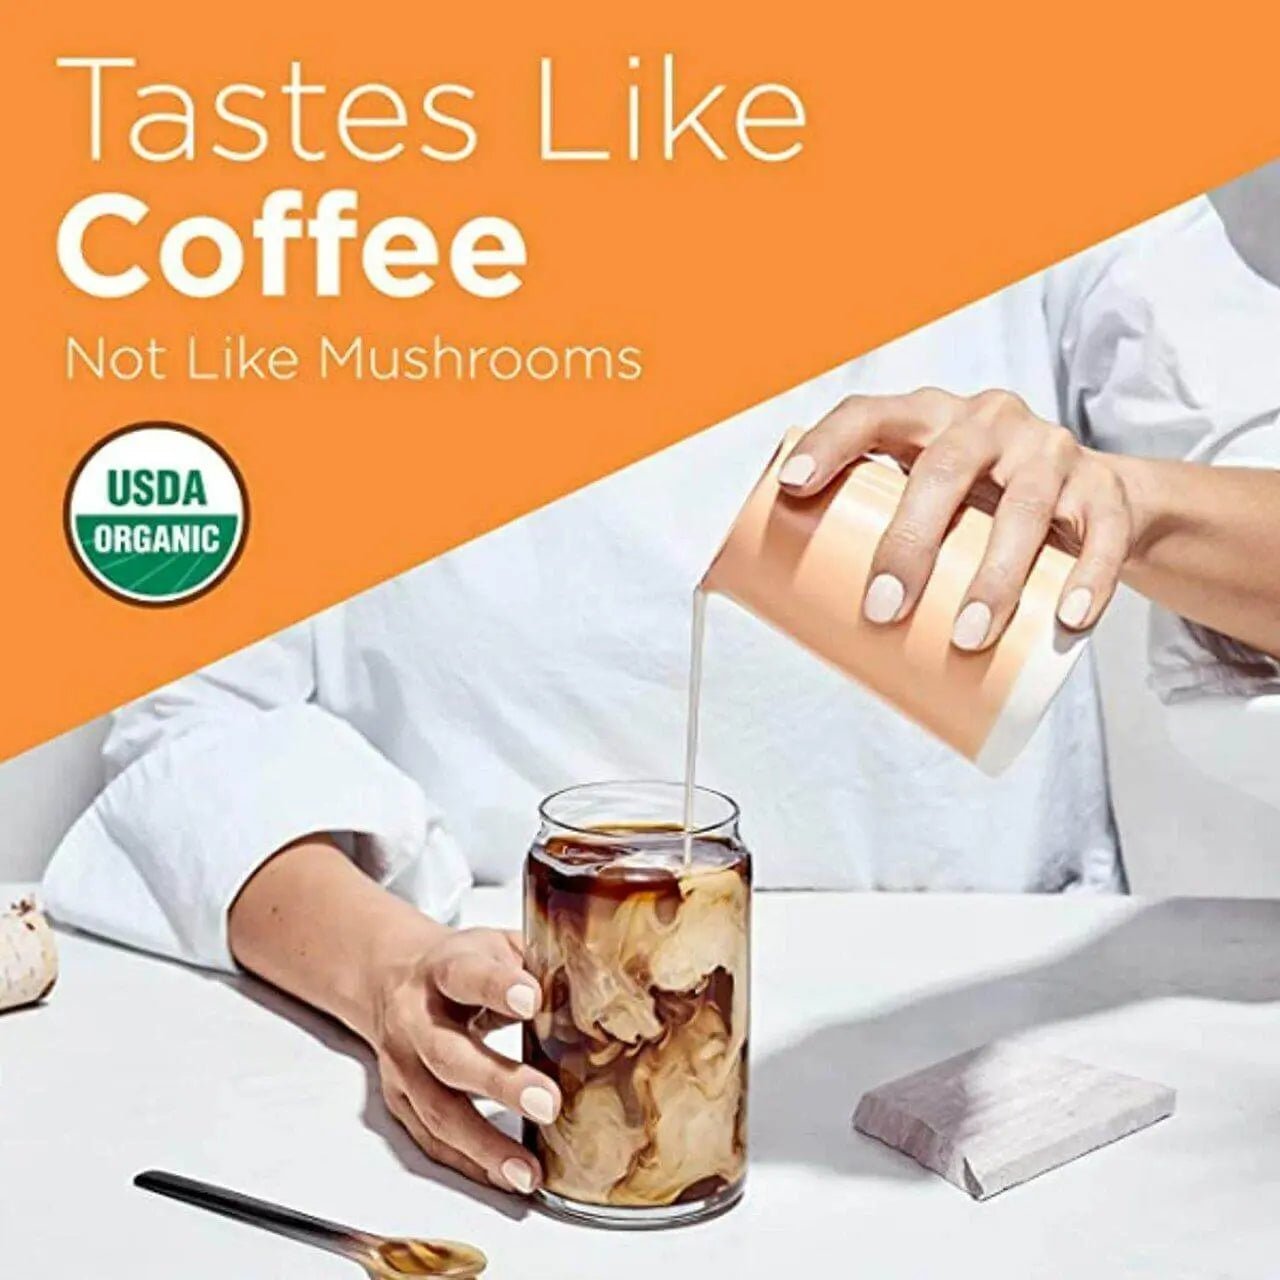 Four Sigmatic Mushroom Coffee Mix with Cordyceps & Chaga 10 Packets - Nutrition Plus